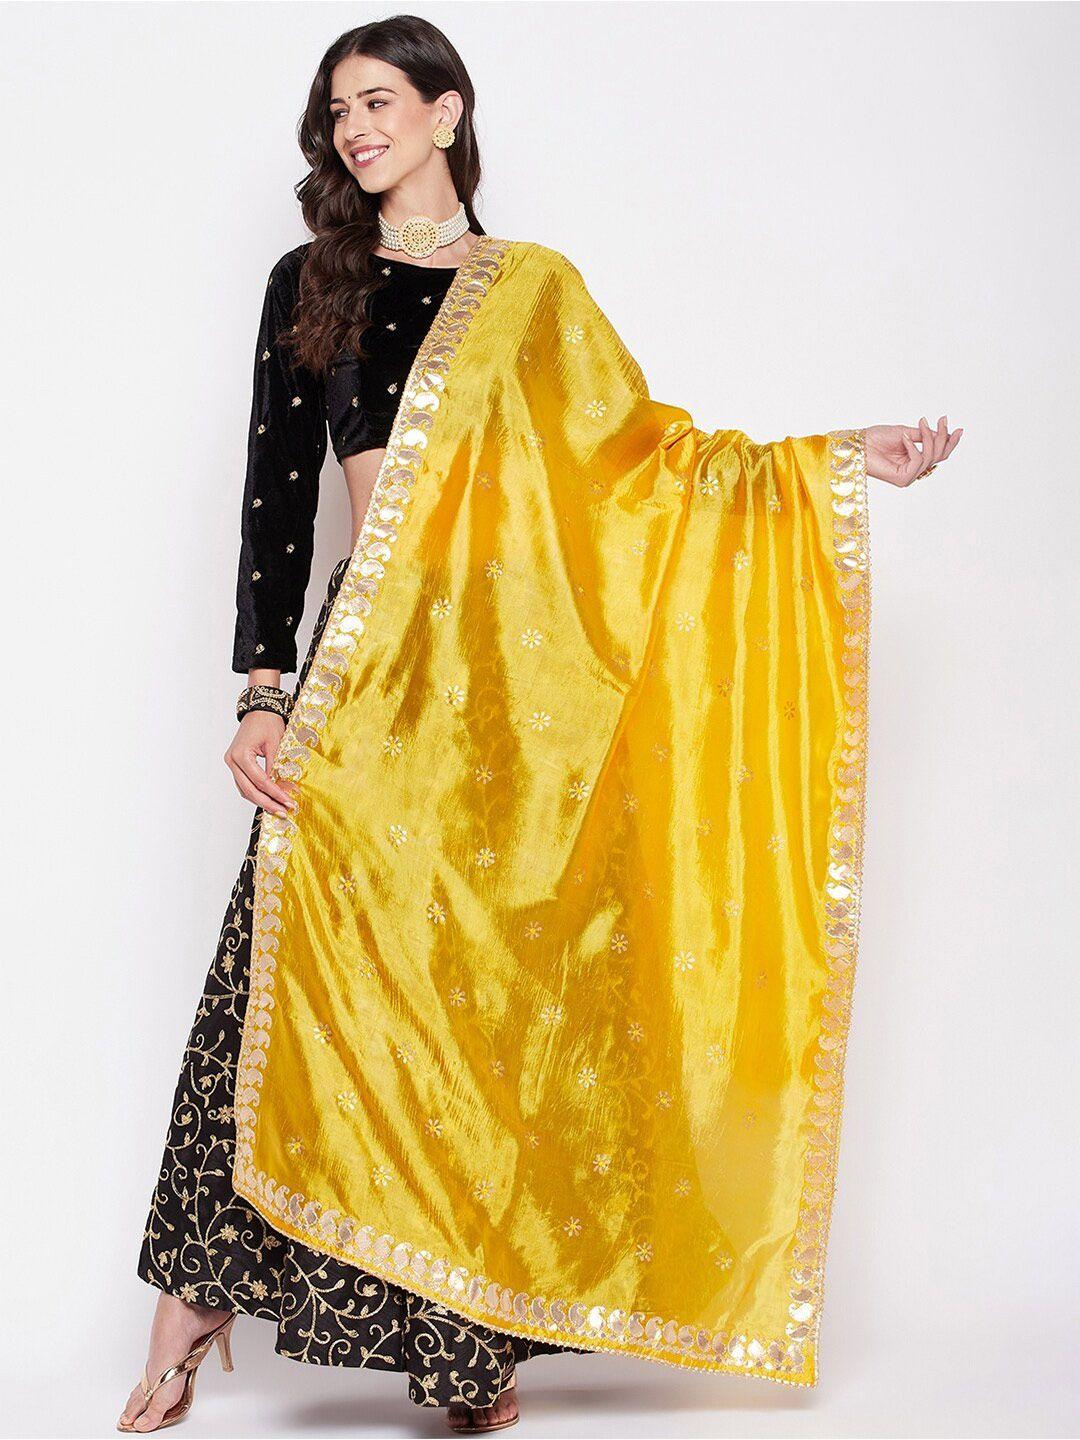 clora-creation-yellow-&-gold-toned-ethnic-motifs-embroidered-dupatta-with-gotta-patti